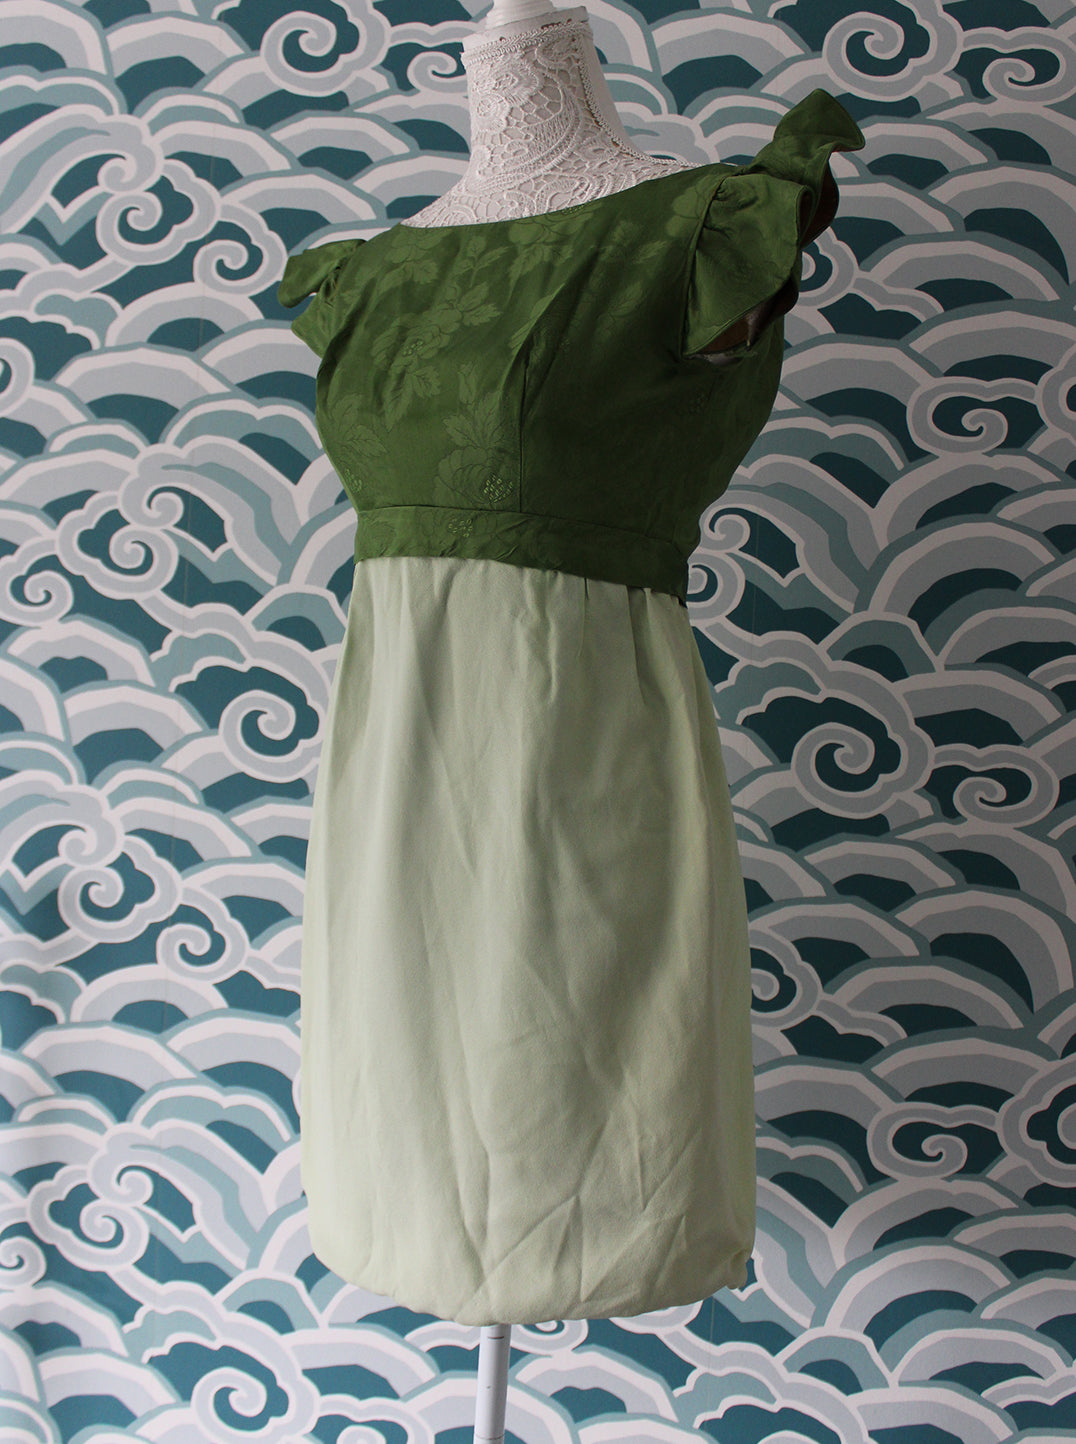 Green 2 Tone Dress